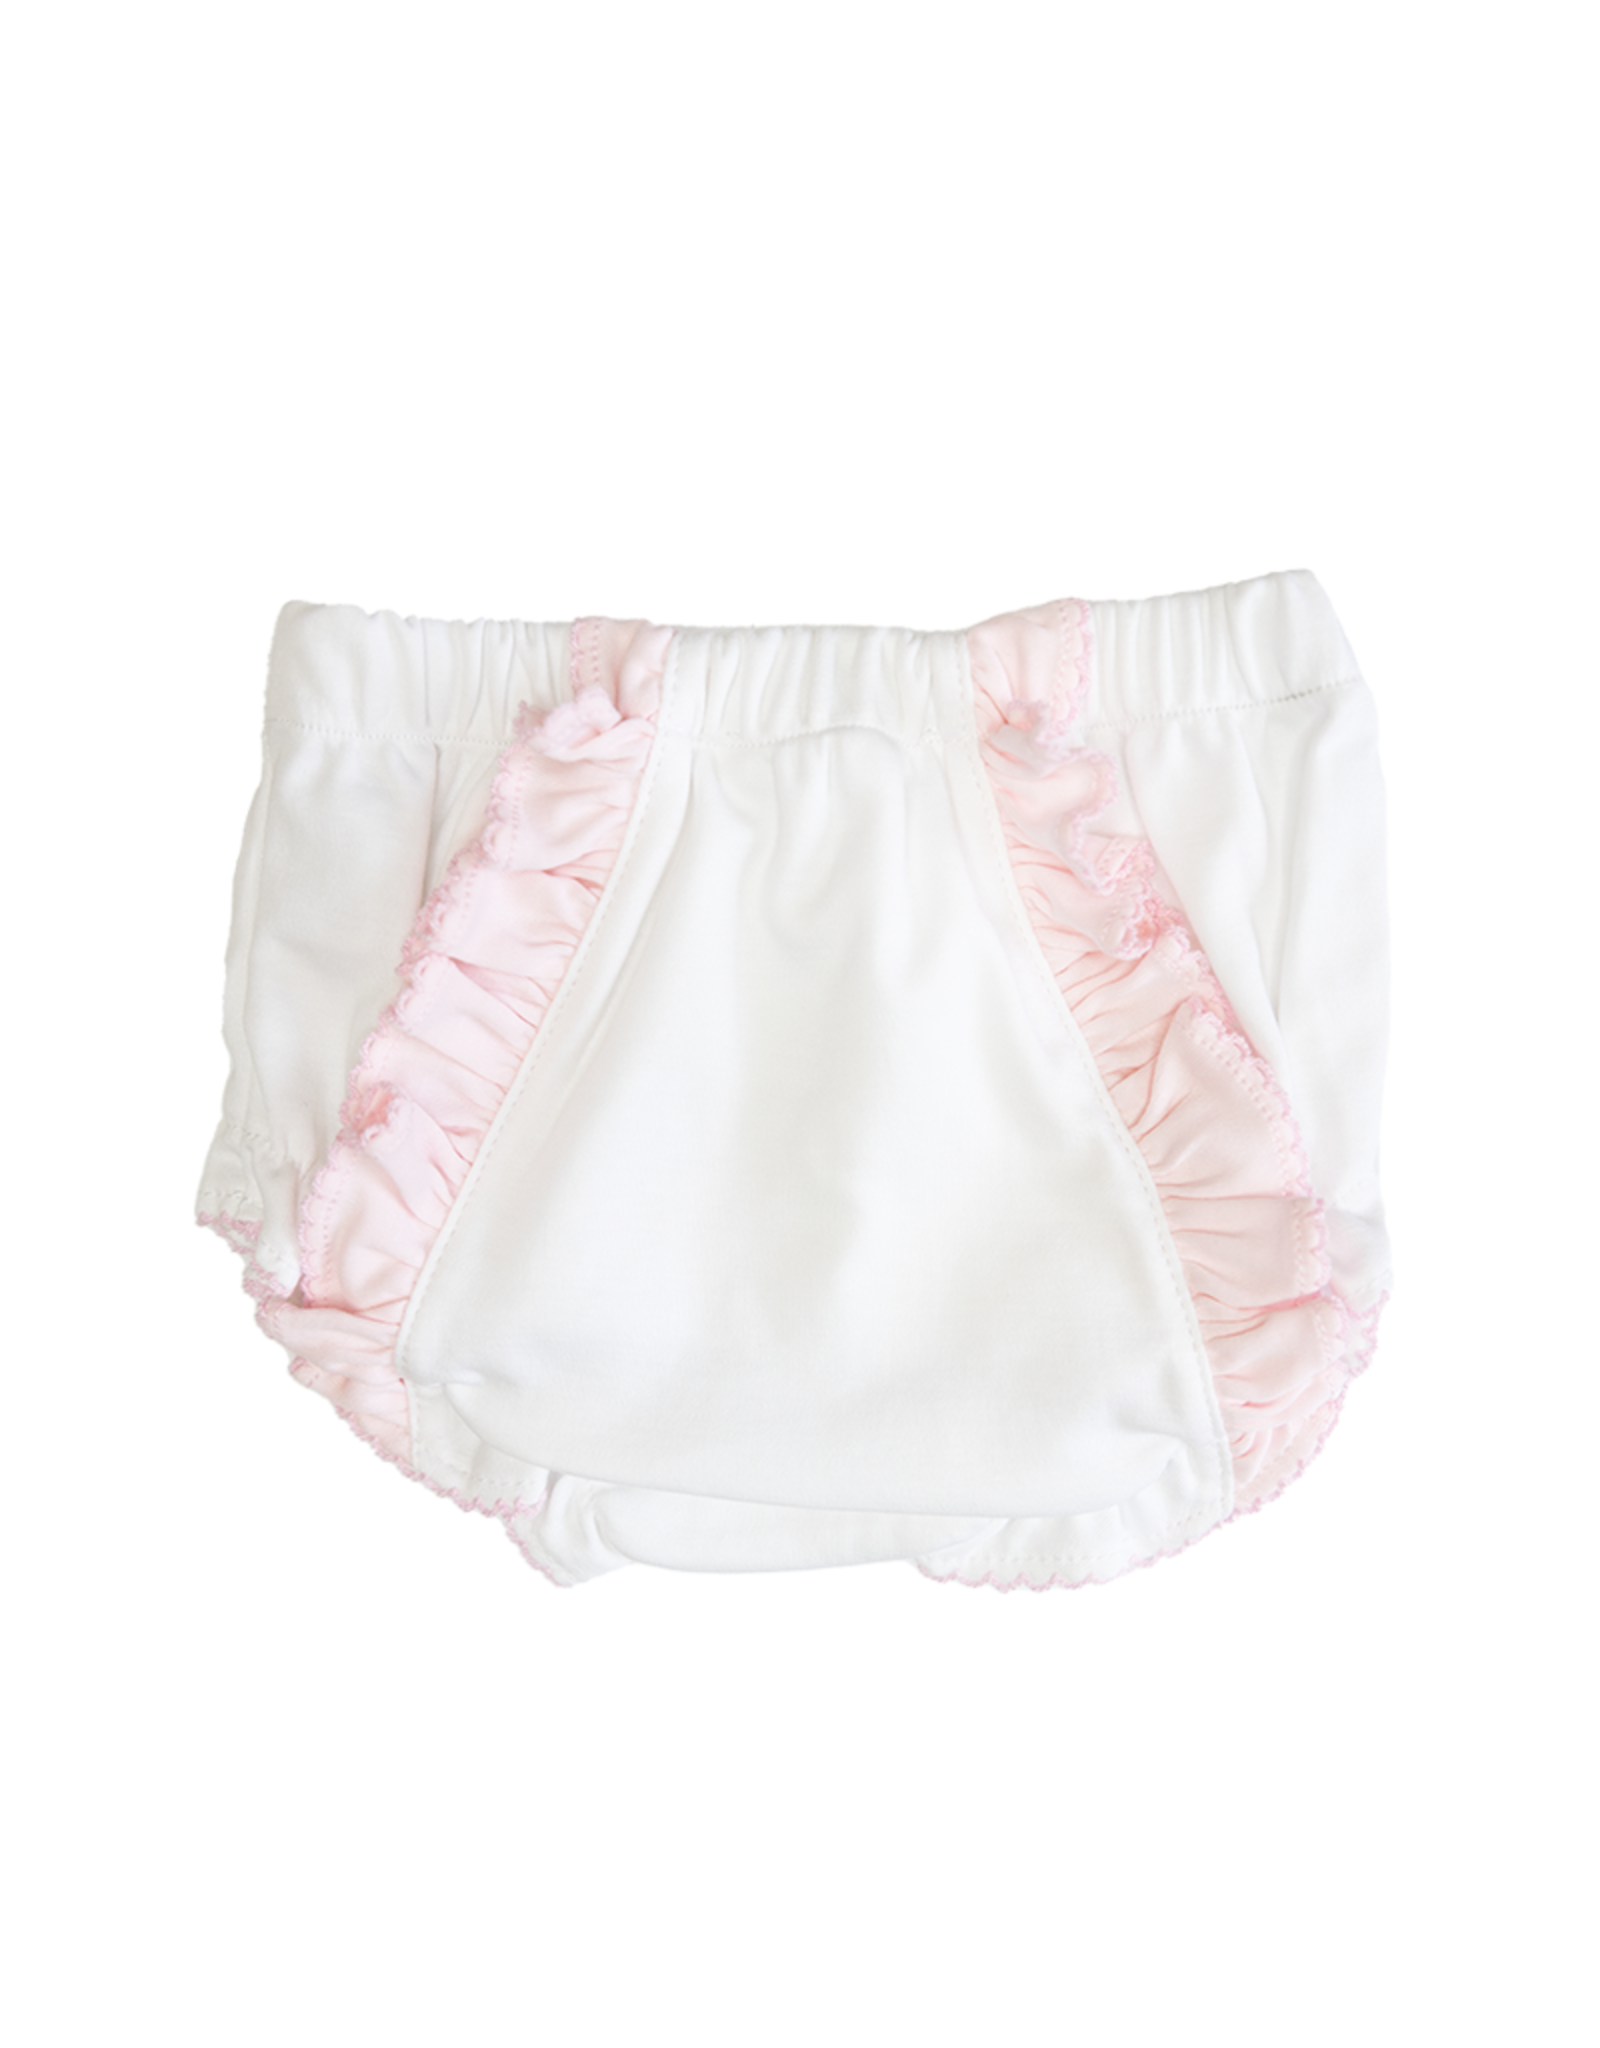 Baby Loren WPD-300 White/Pink Pima Knit Diaper Cover